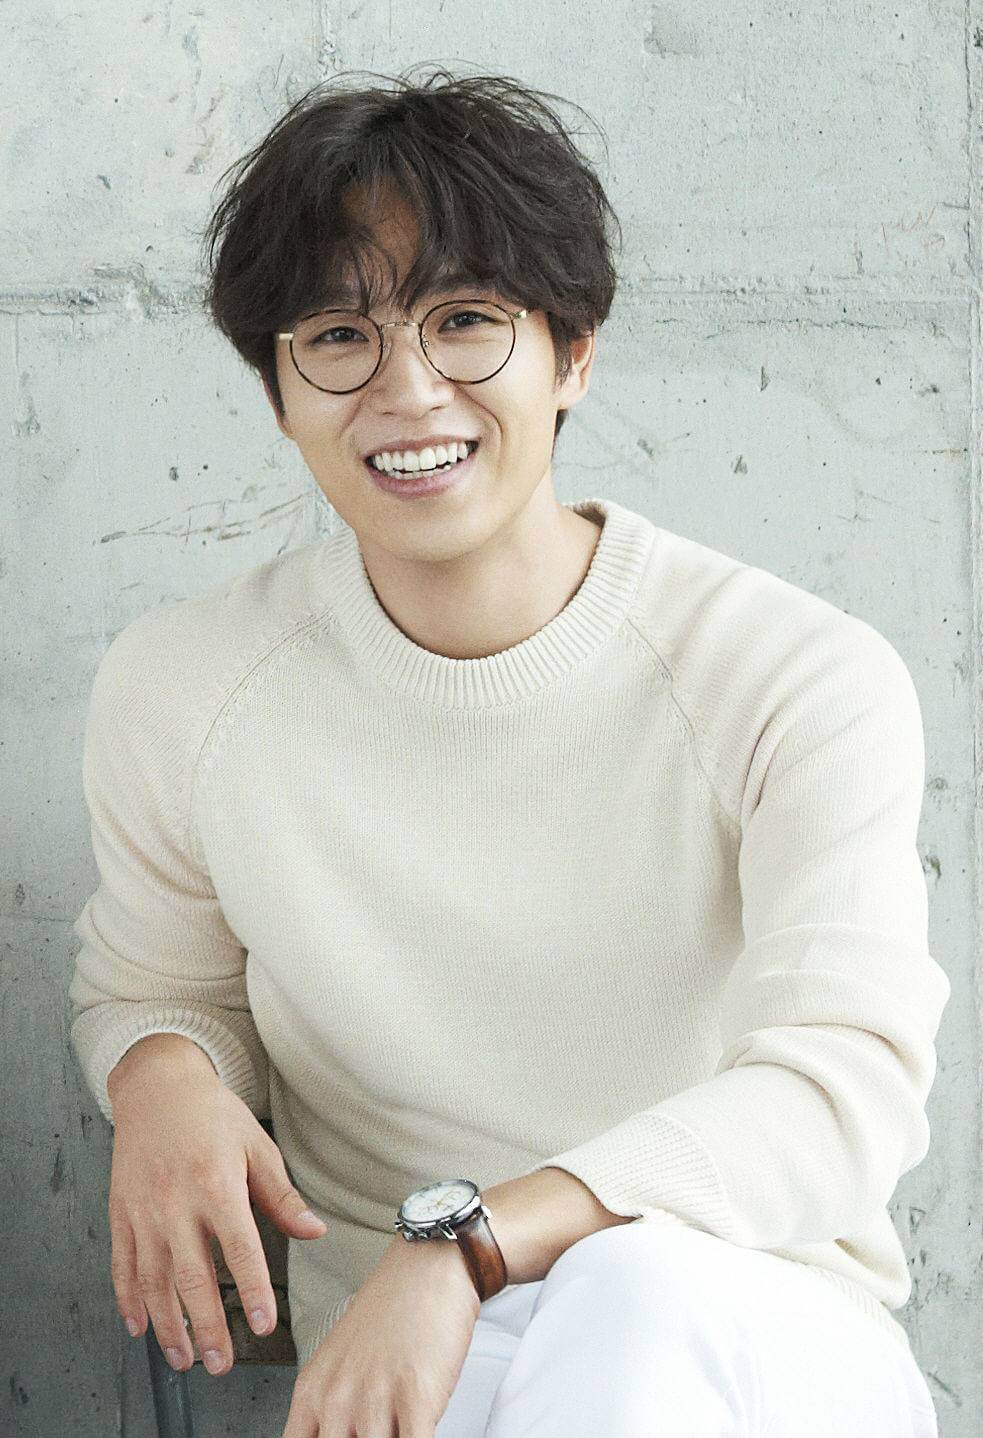 Lee Seok Hoon